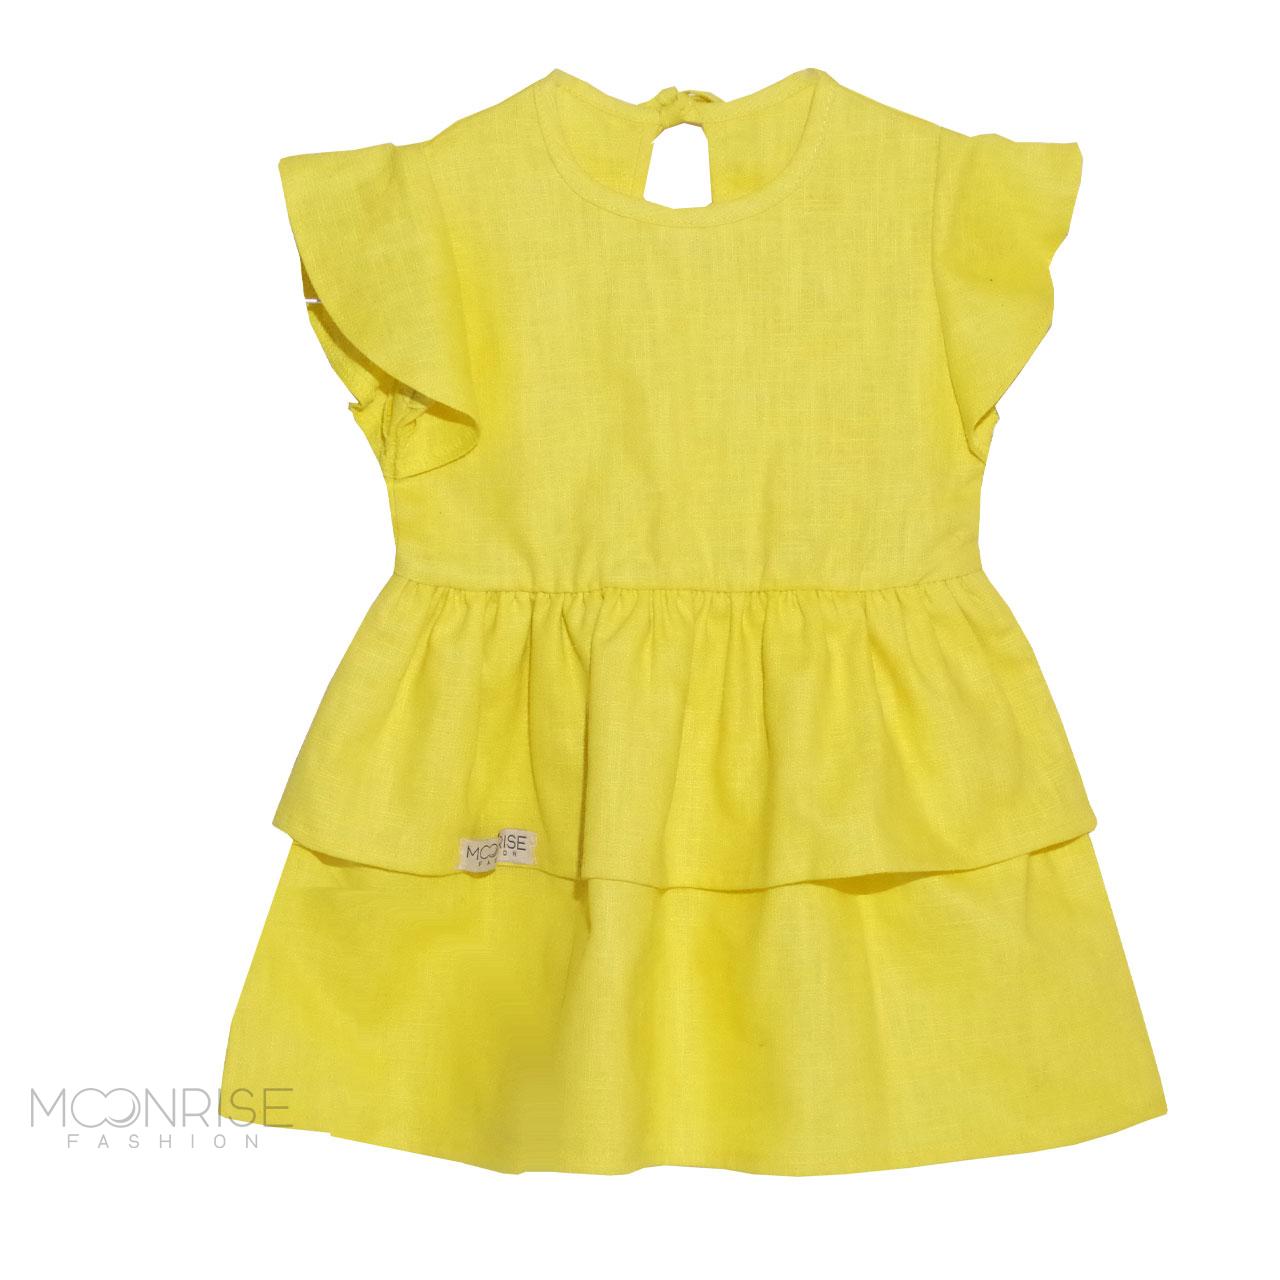 Detské ľanové šaty s volánom - yellow 86